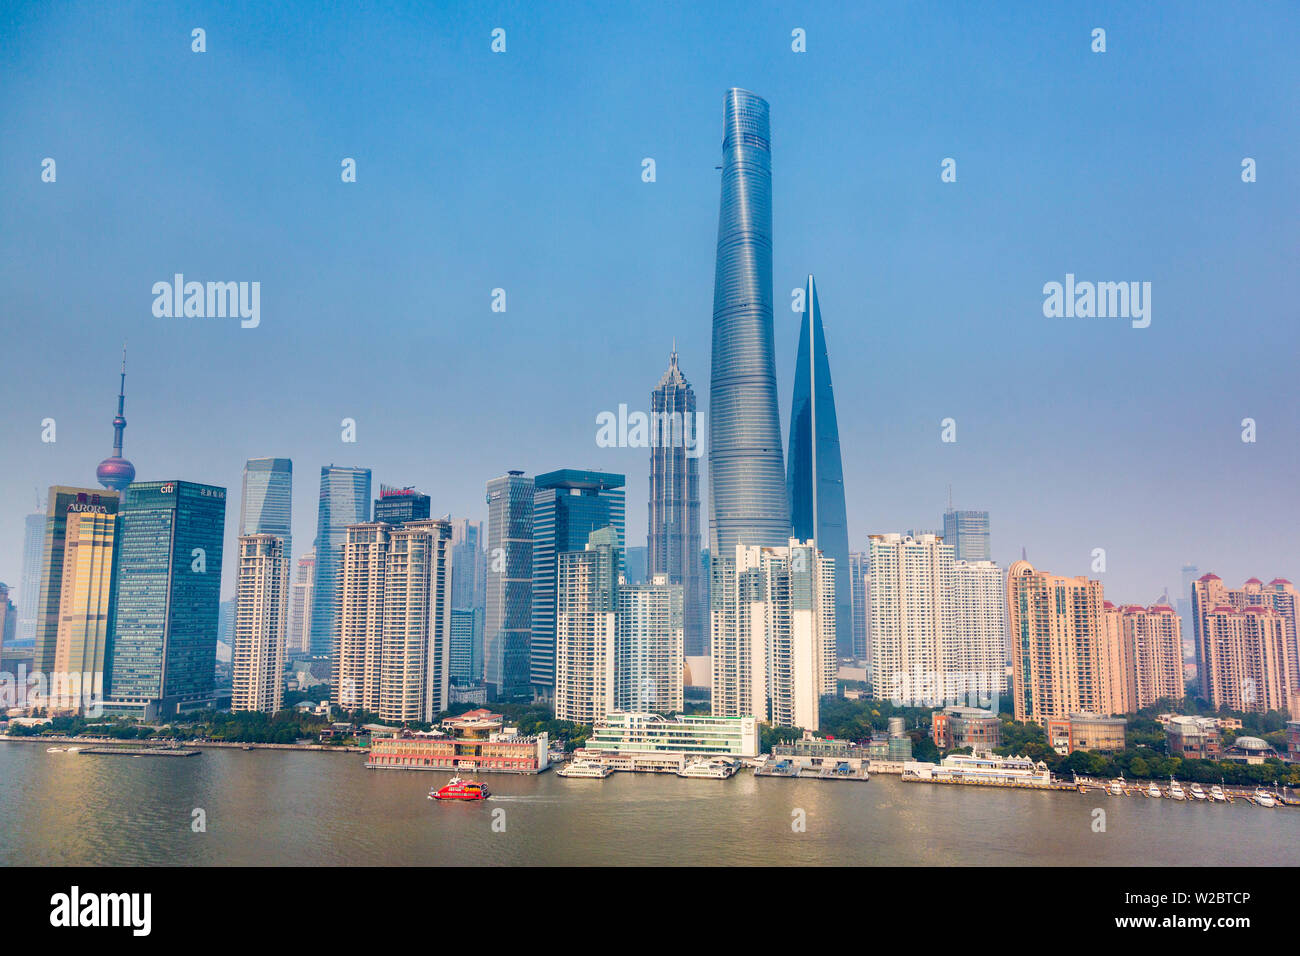 Shanghai Tower and the Pudong skyline across the Huangpu river, Shanghai, China Stock Photo